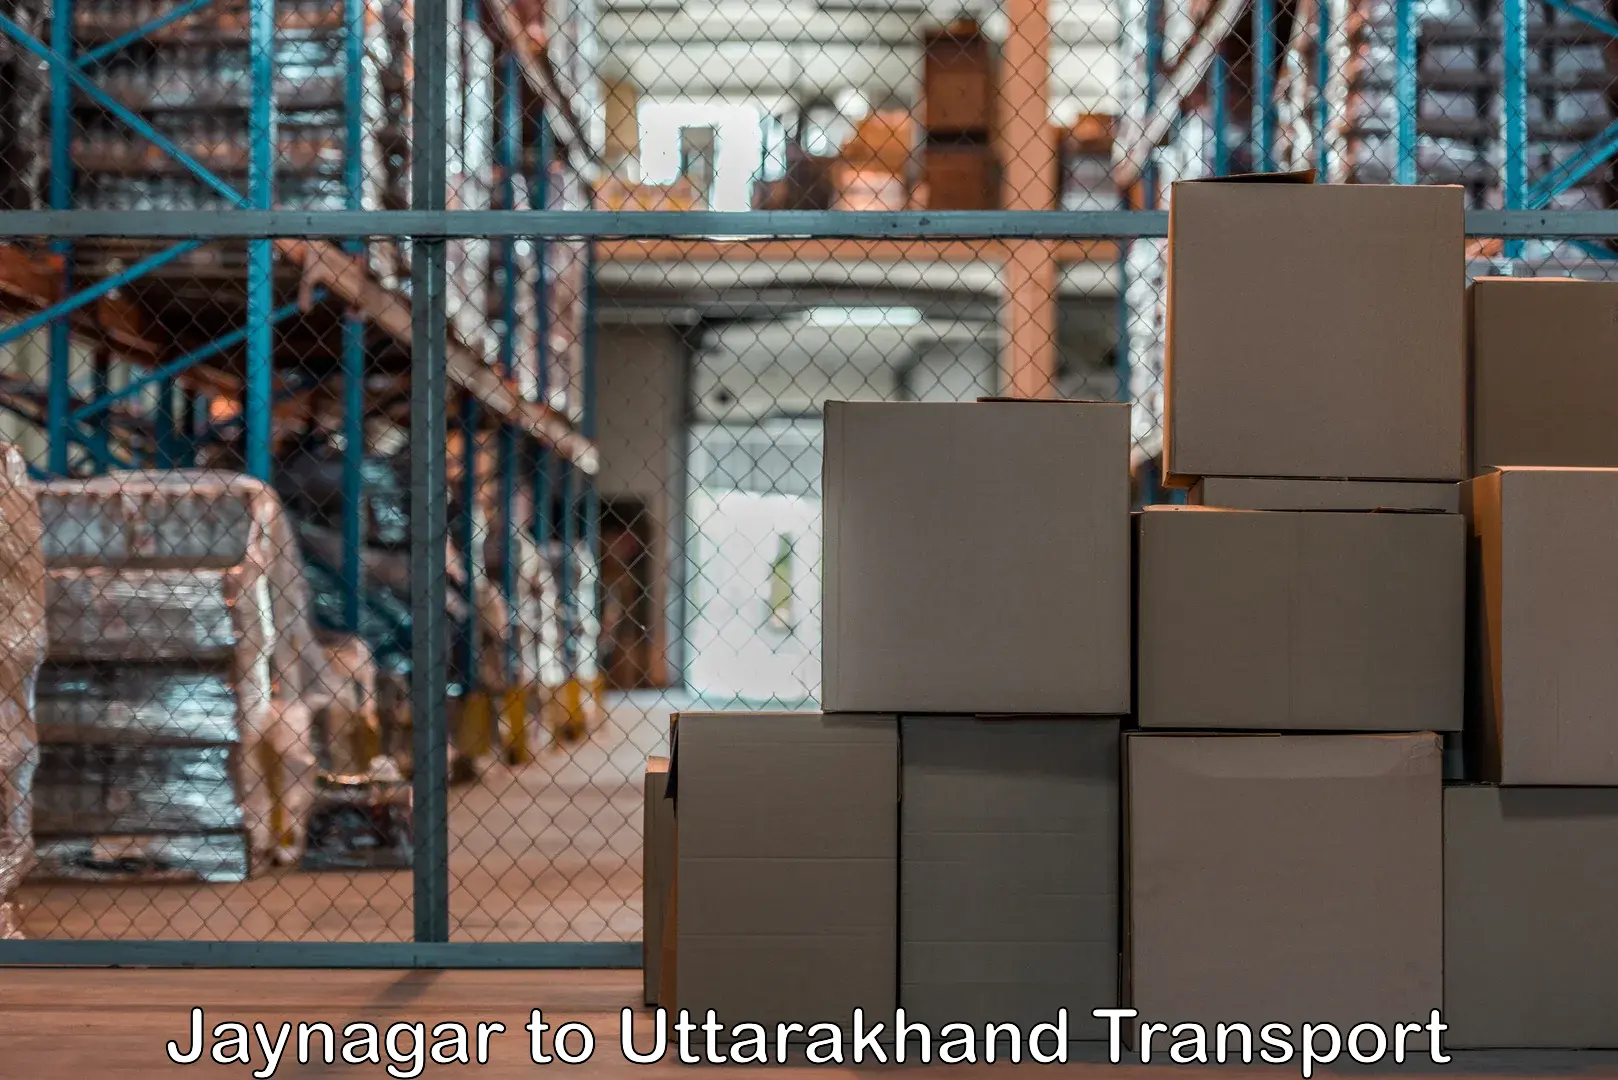 Truck transport companies in India Jaynagar to Uttarakhand